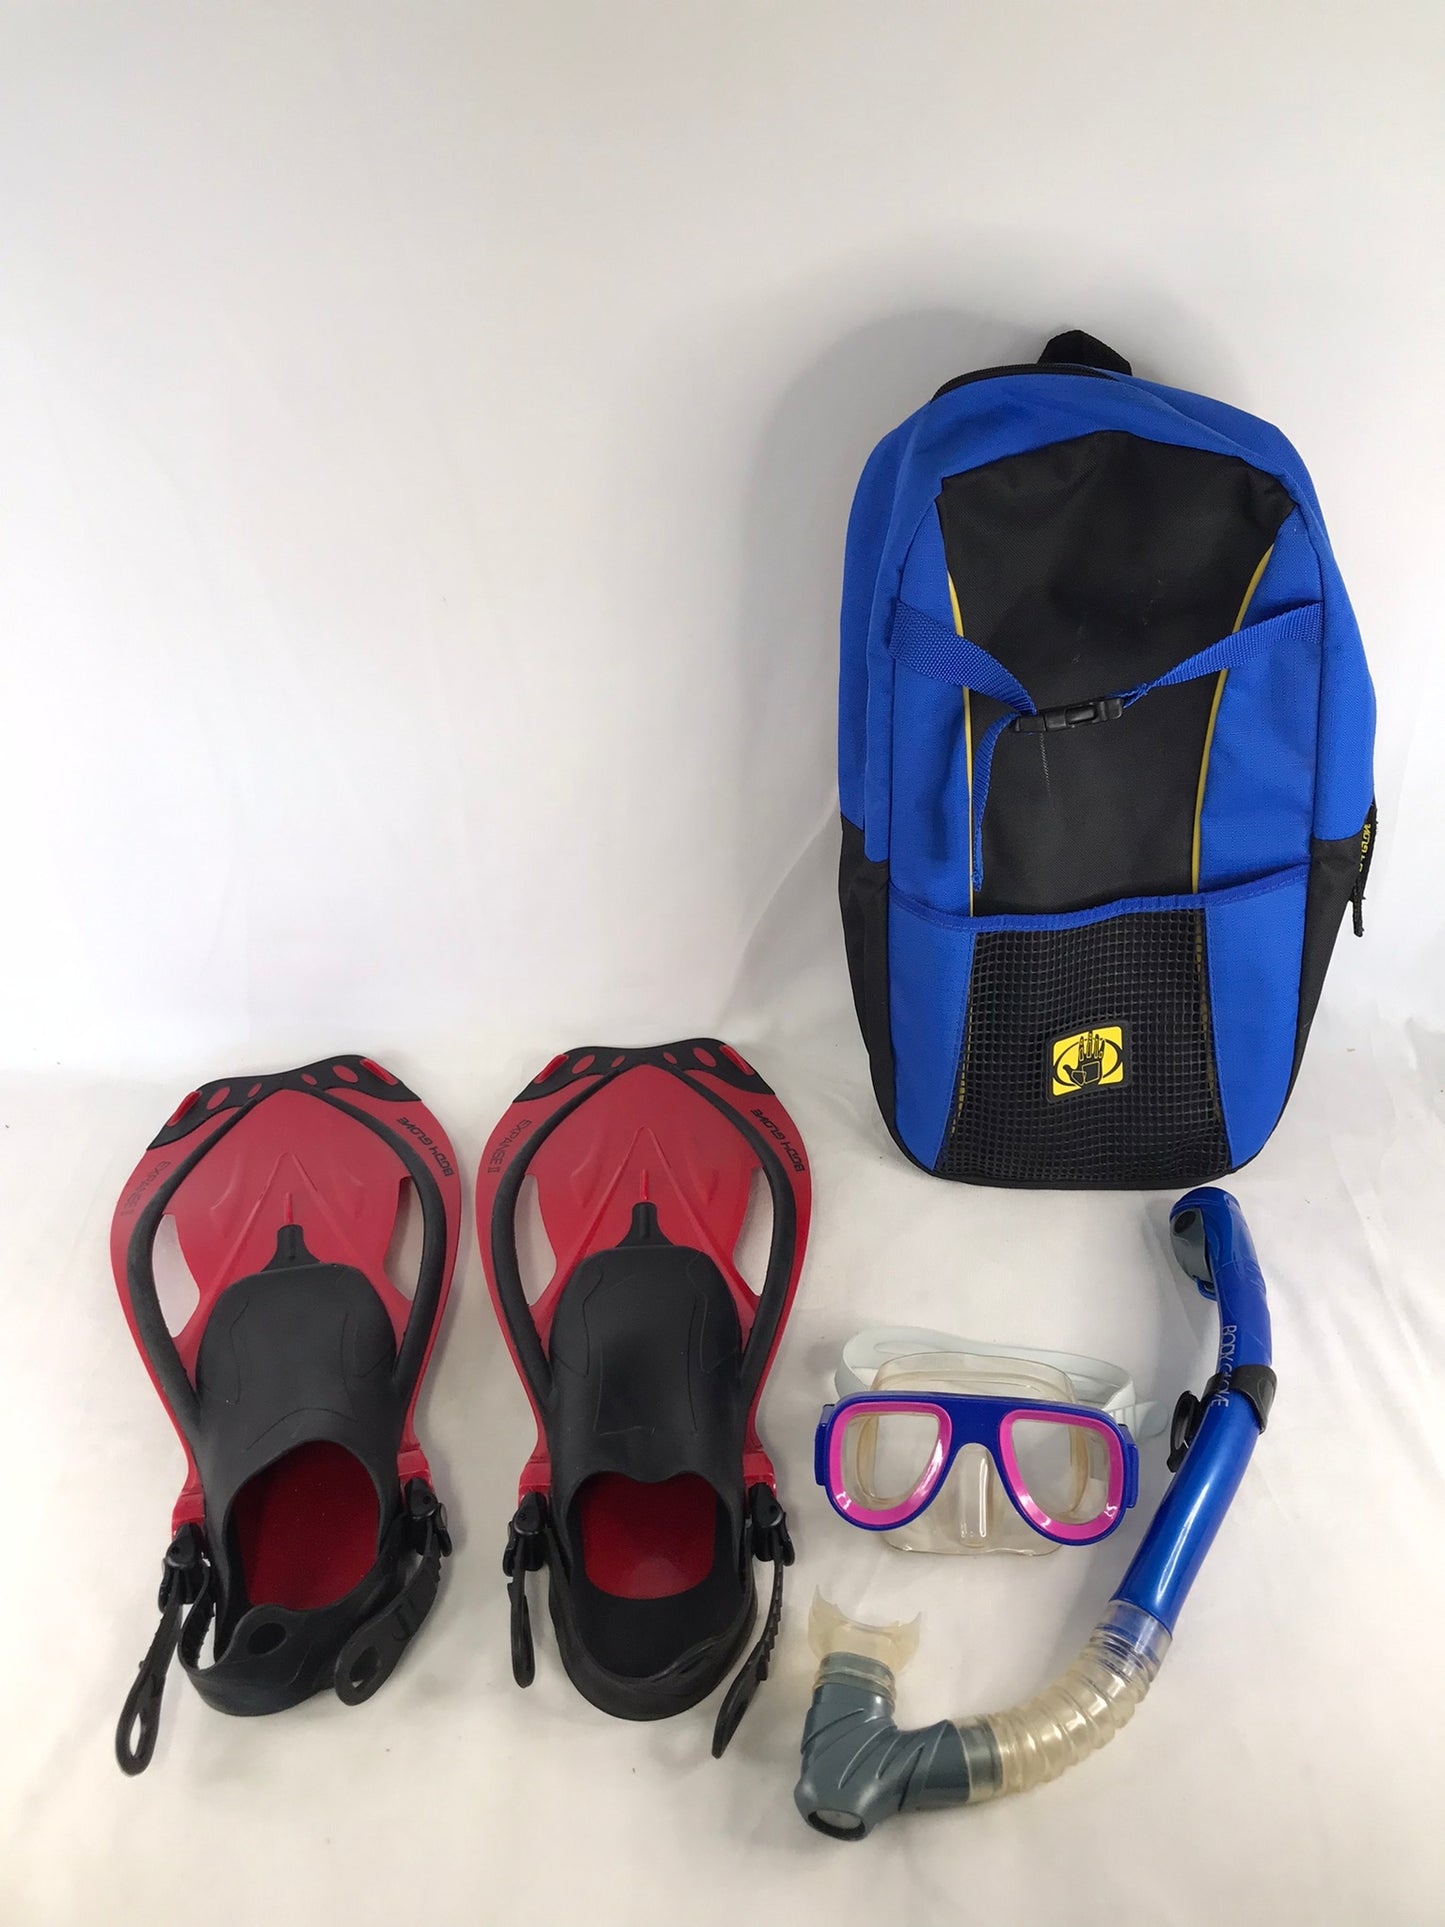 Snorkel Dive Fins Ladies Shoe Size 4.5-8.5 Body Glove Red Blue